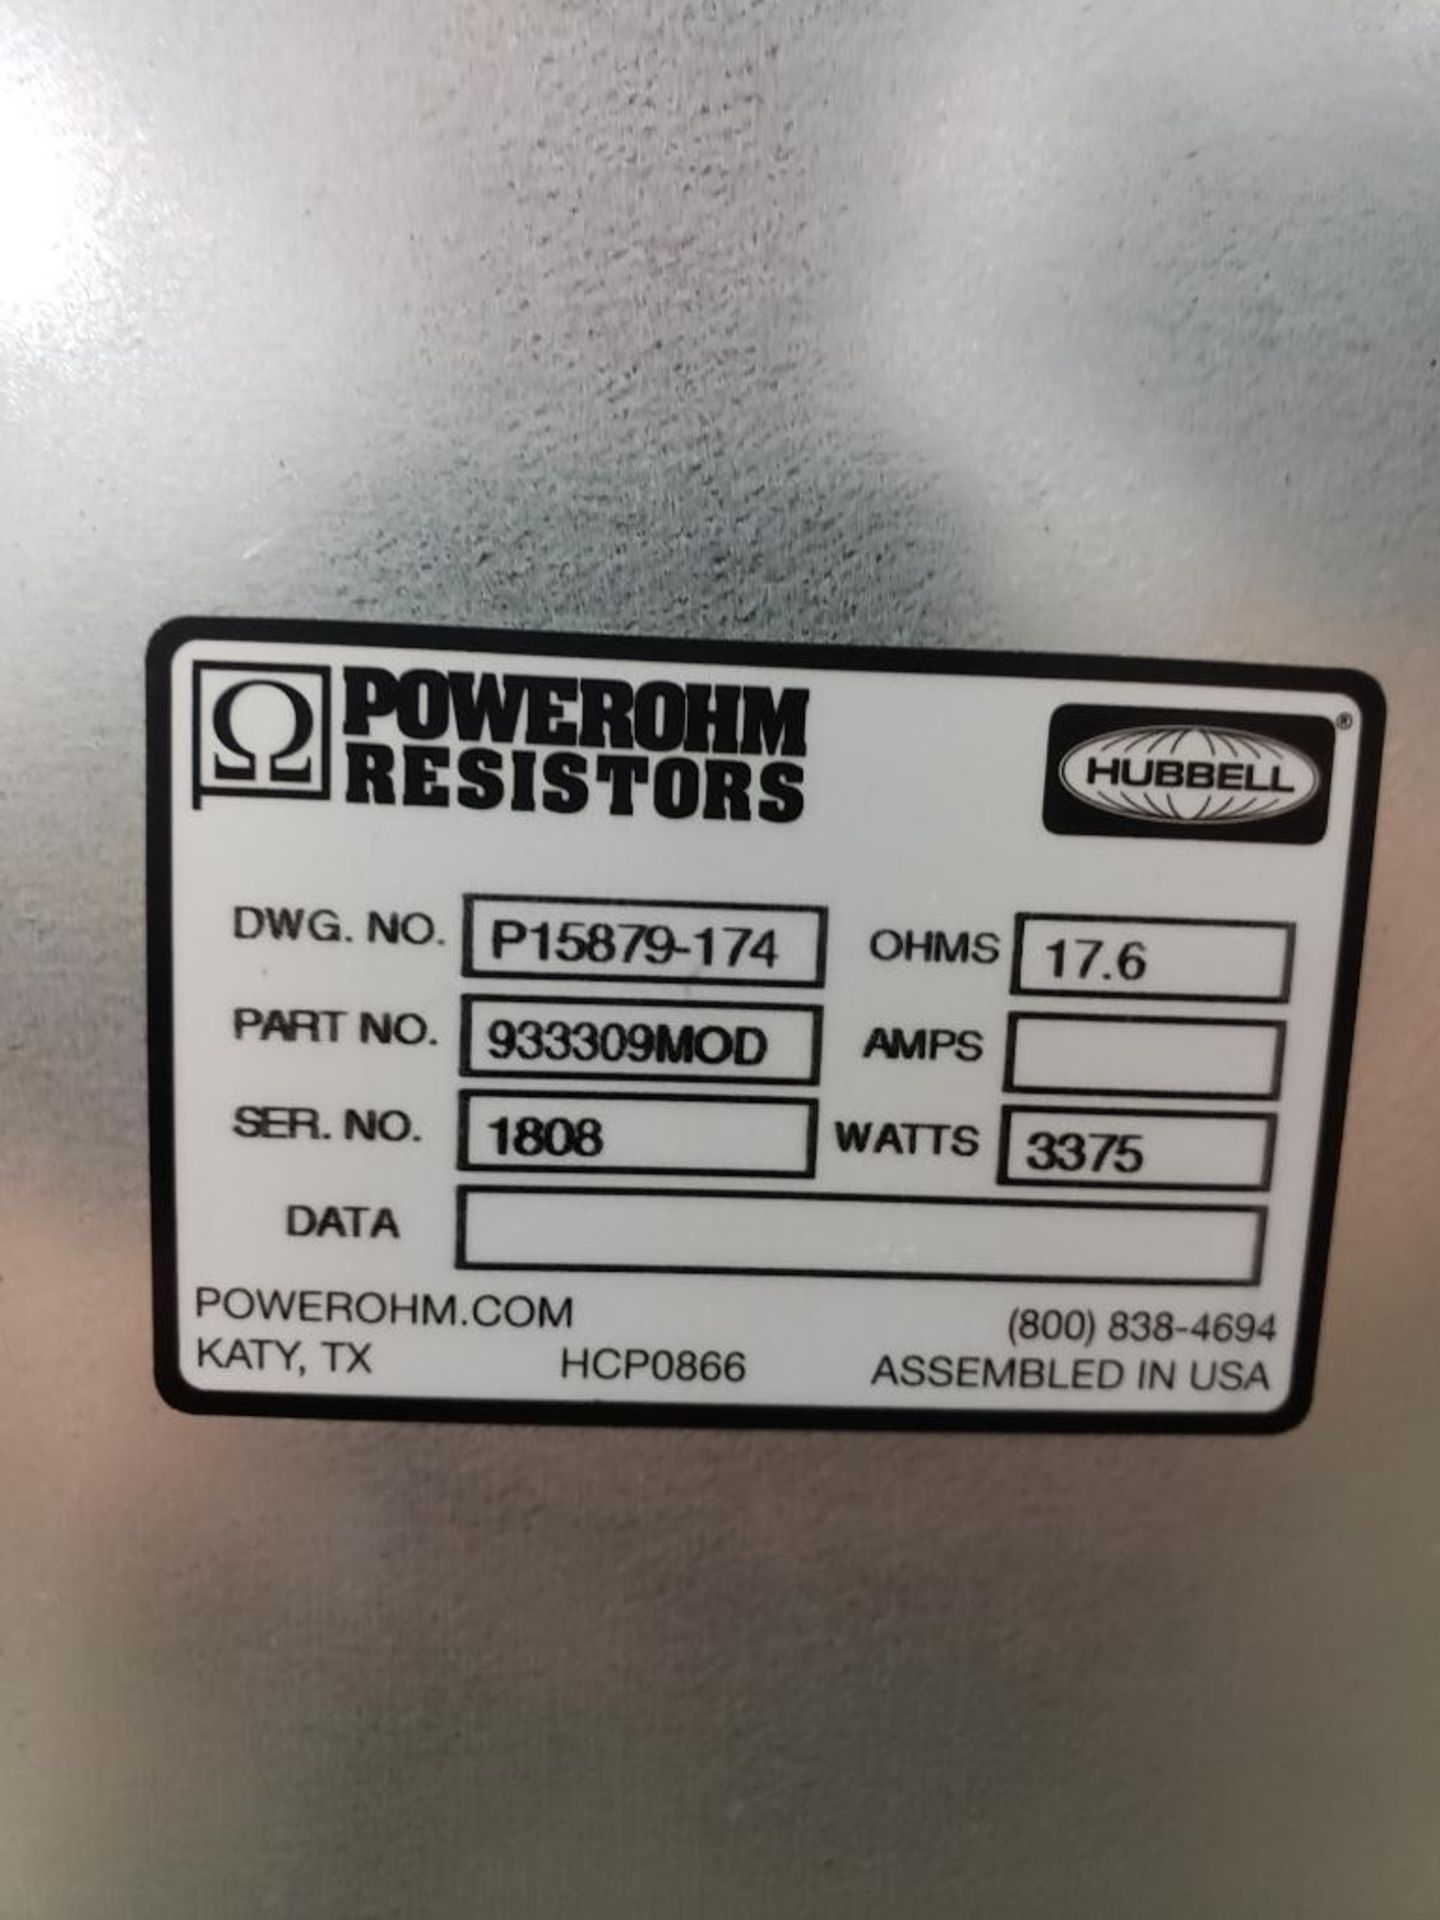 Powerohm Resistors Inc Hubbell 3375 watt brake. 17.5ohm. Part number 933309MOD. New. - Image 3 of 3